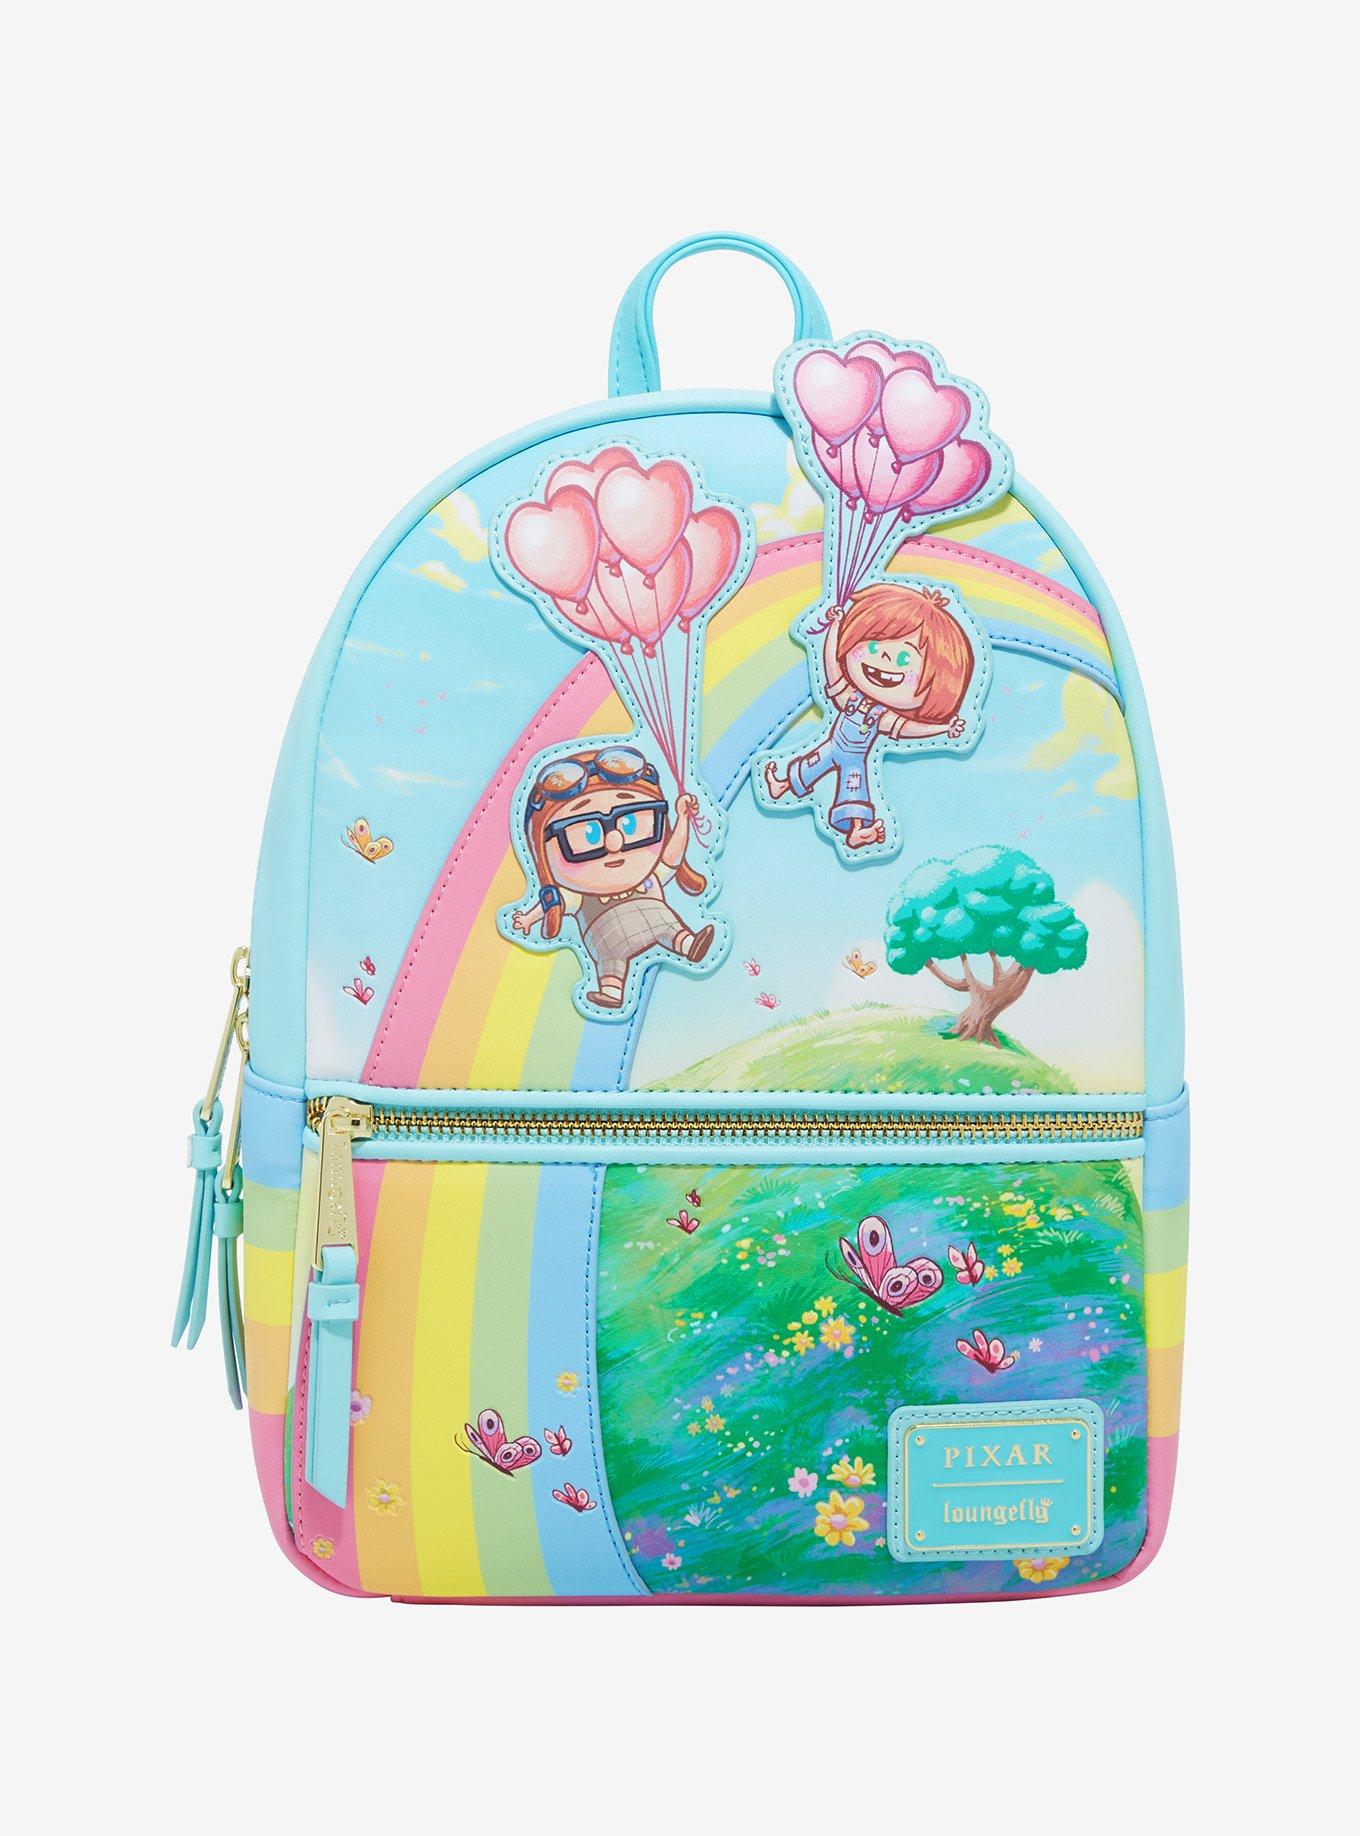 Loungefly Disney Pixar Up Carl & Ellie Rainbow Mini Backpack